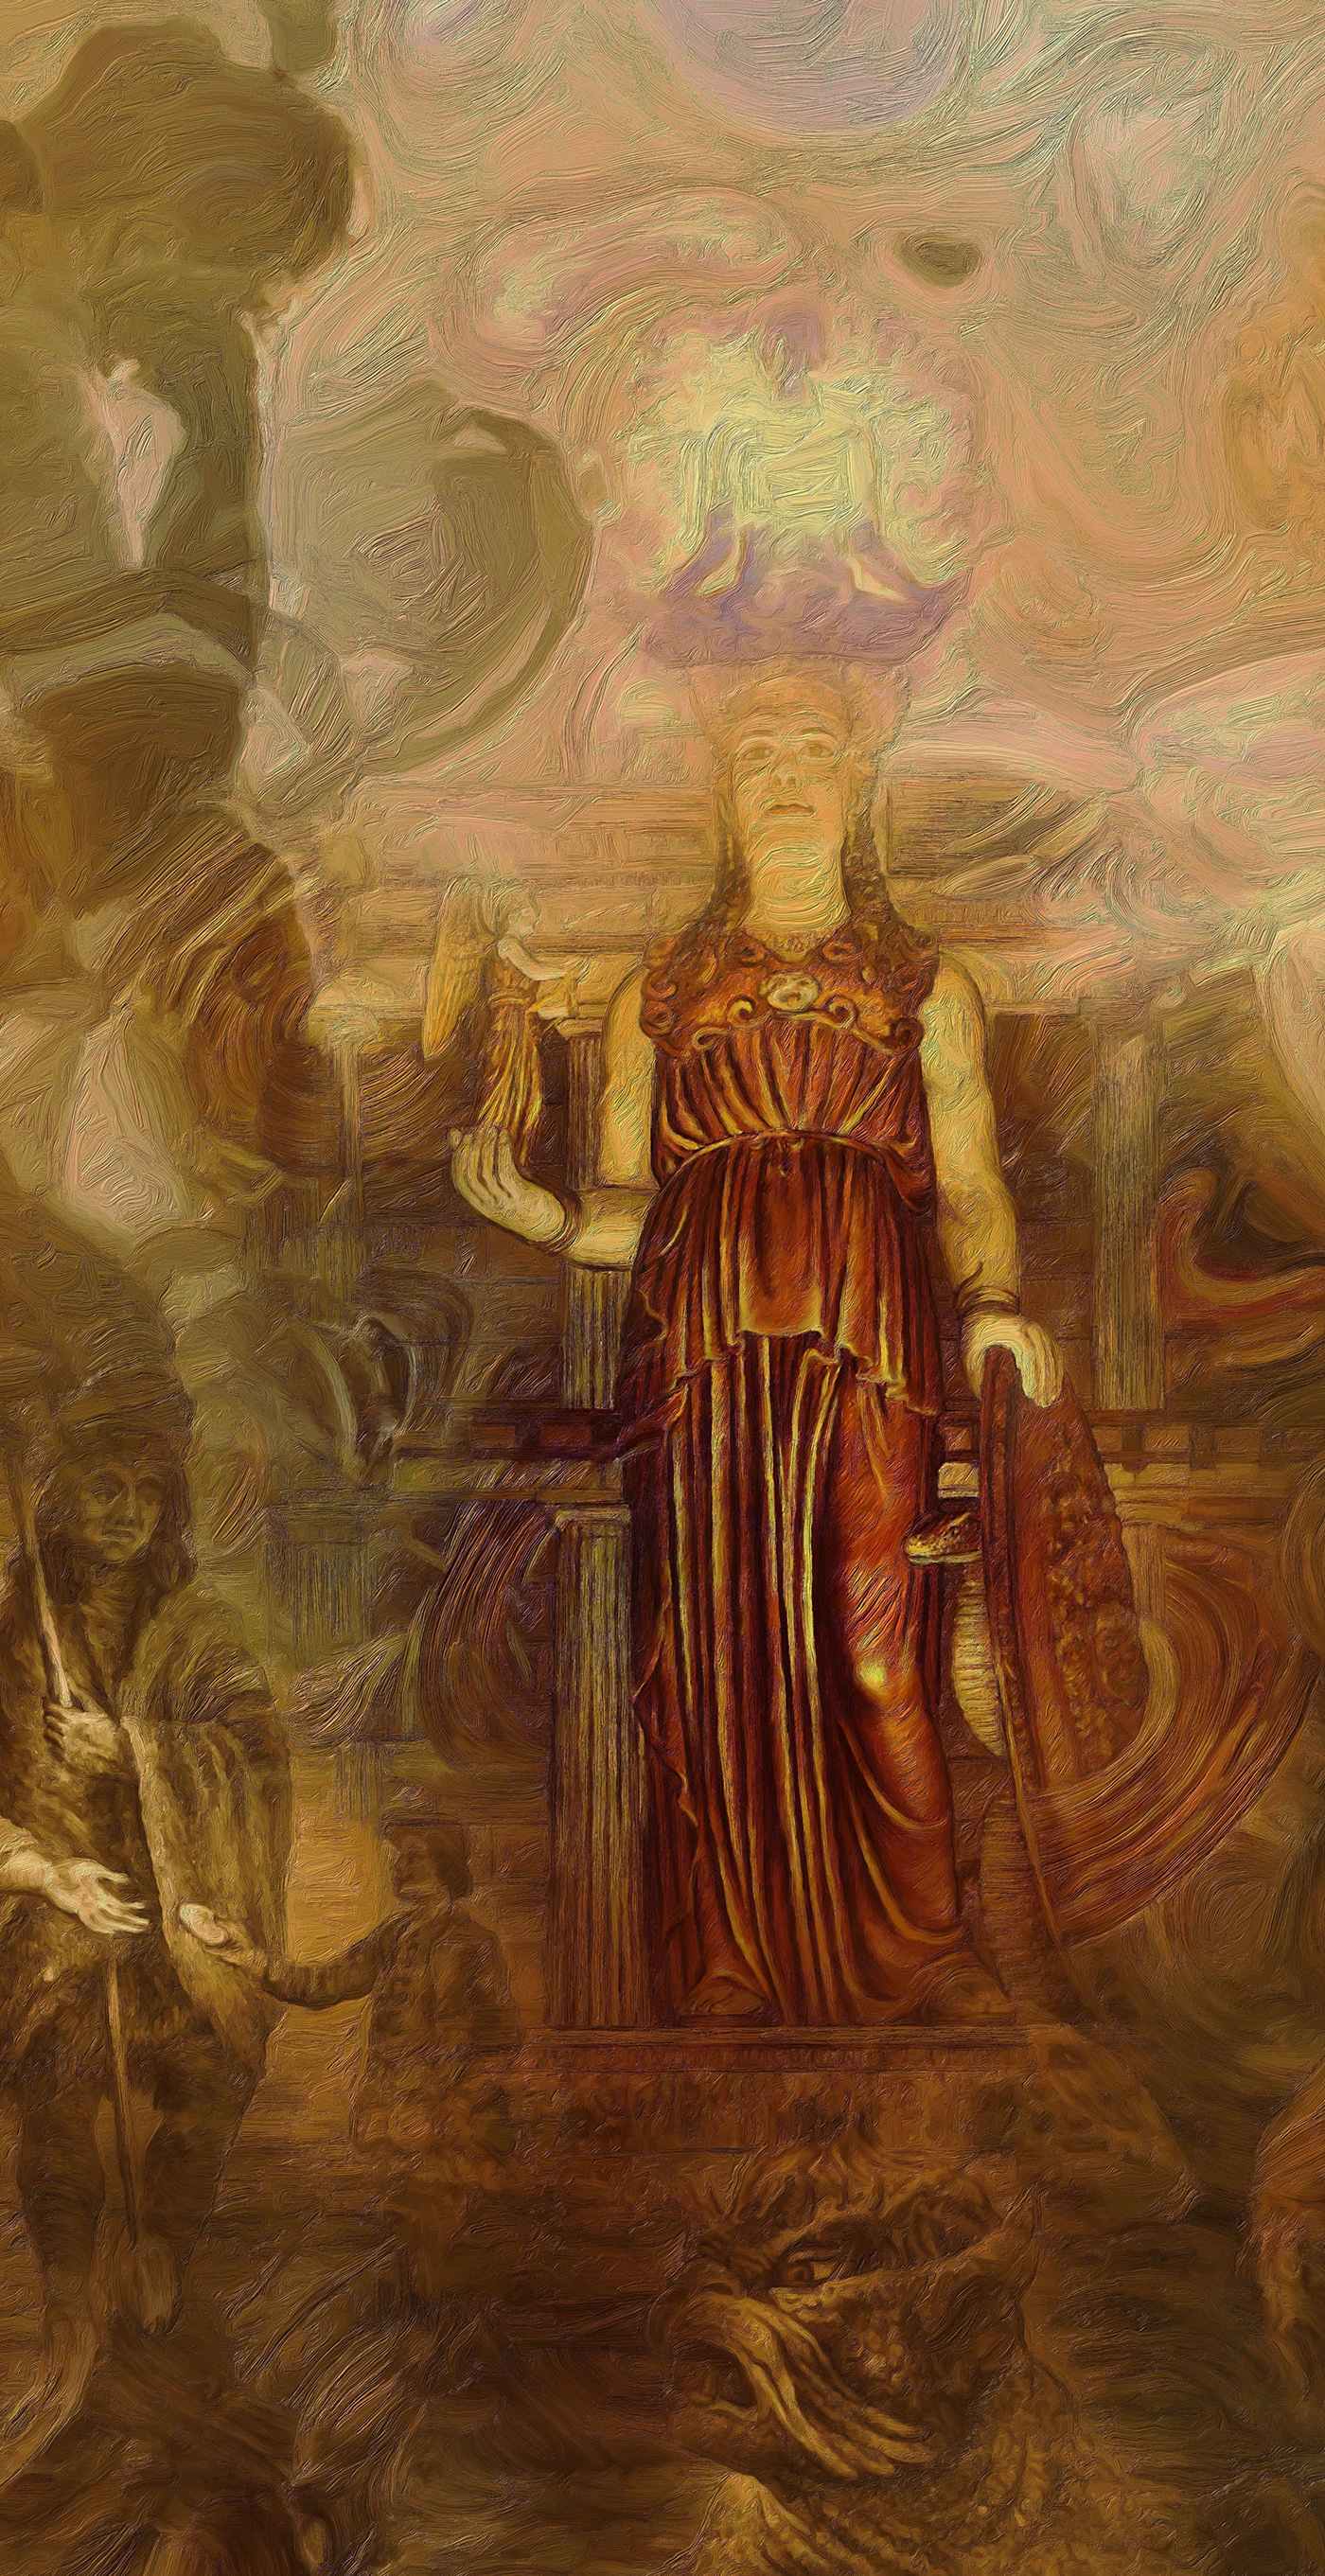 mithology digital painting Ancient greek digital history culture